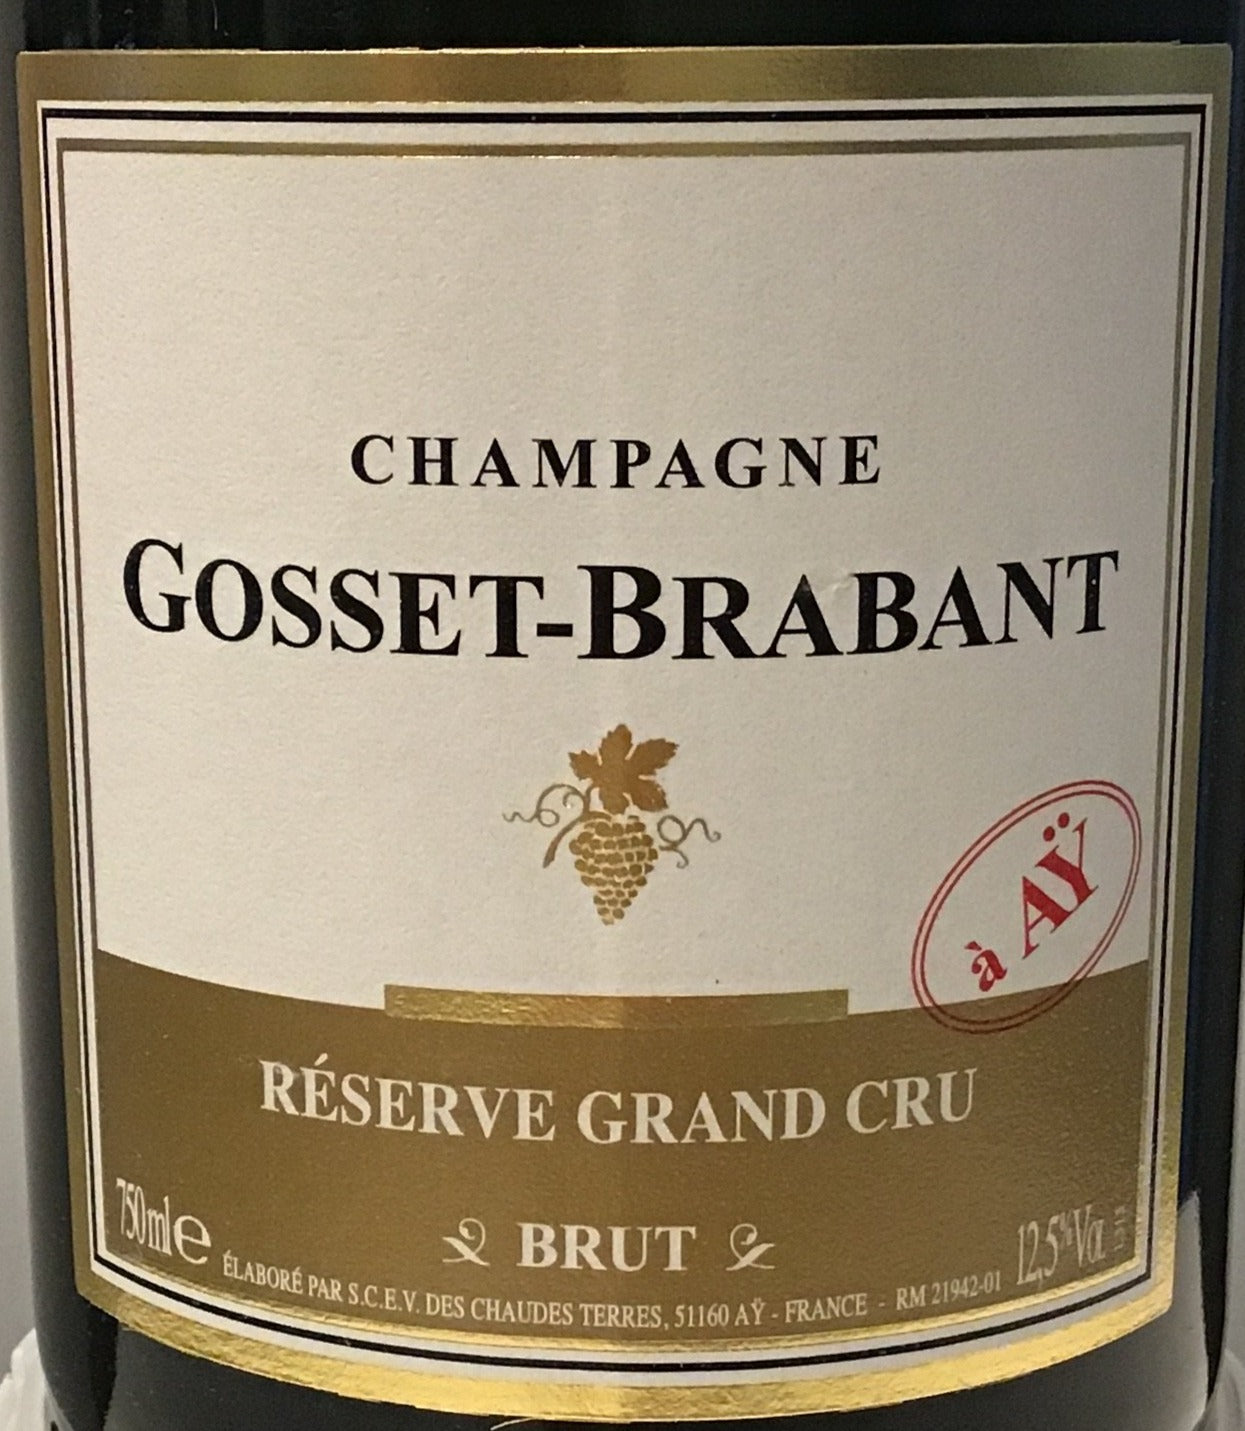 Gosset-Brabant - Reserve Grand Cru